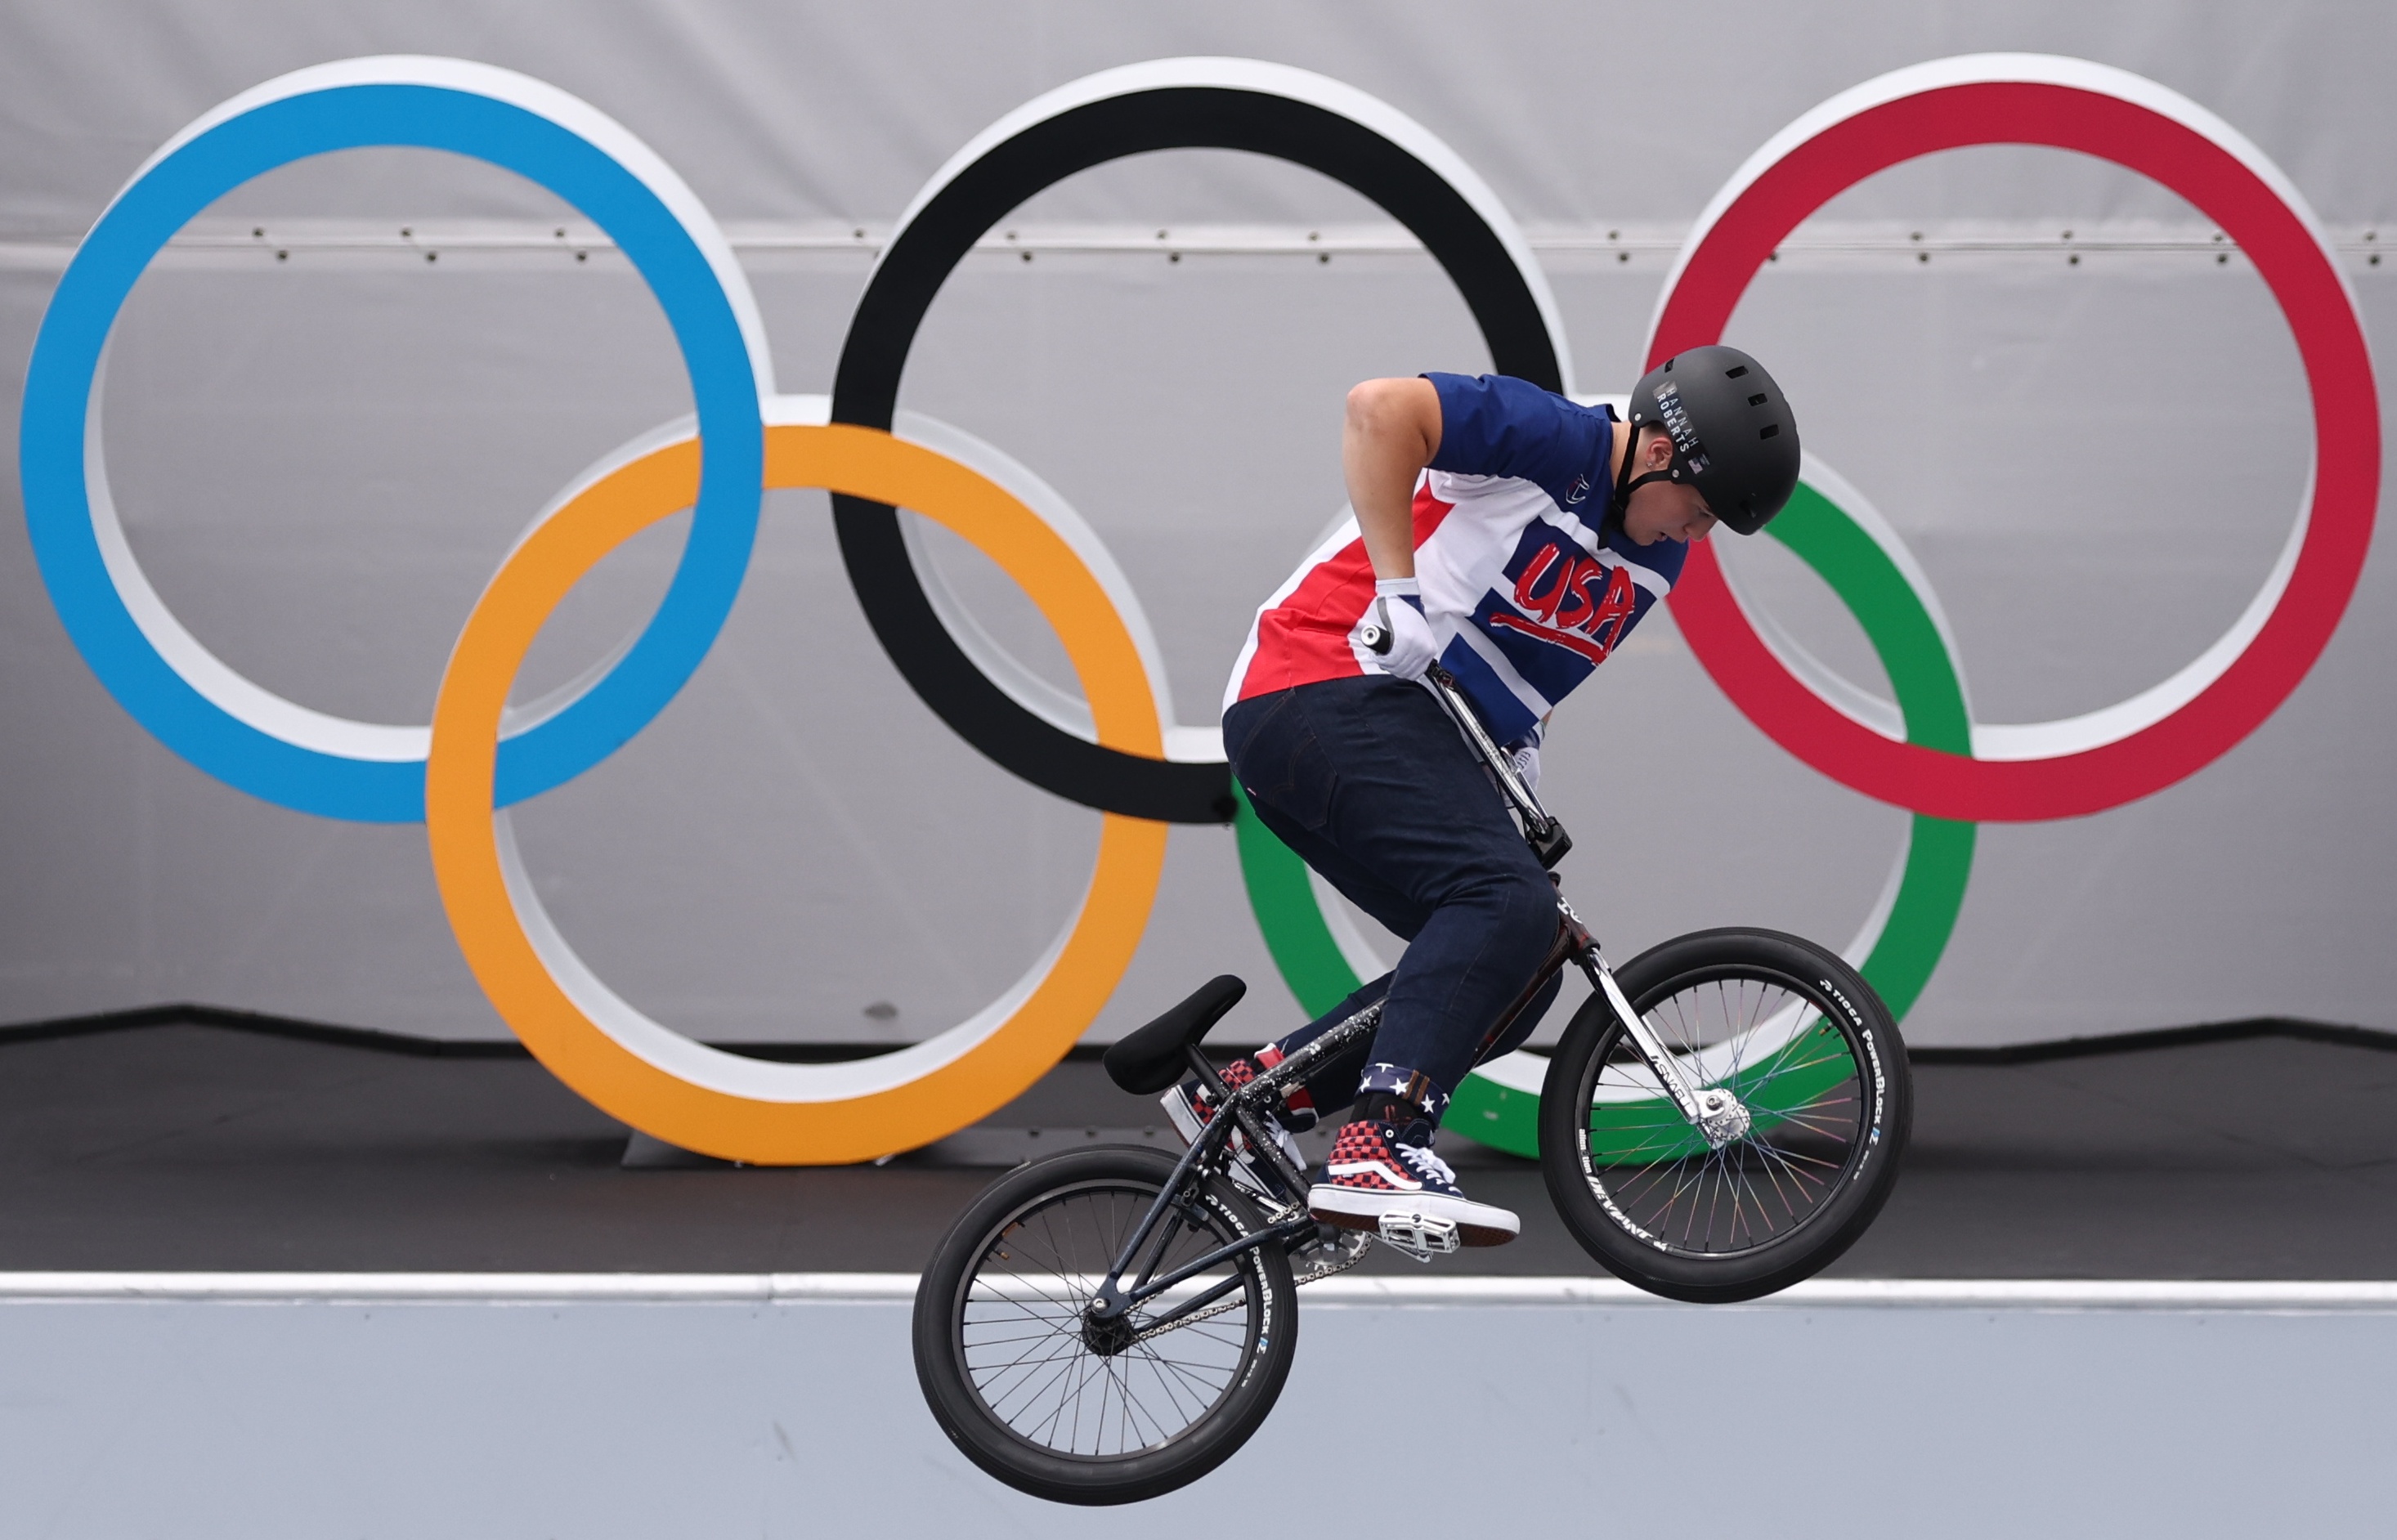 beam Plow Sada Cycling-BMX freestylers soar on Games debut | Reuters